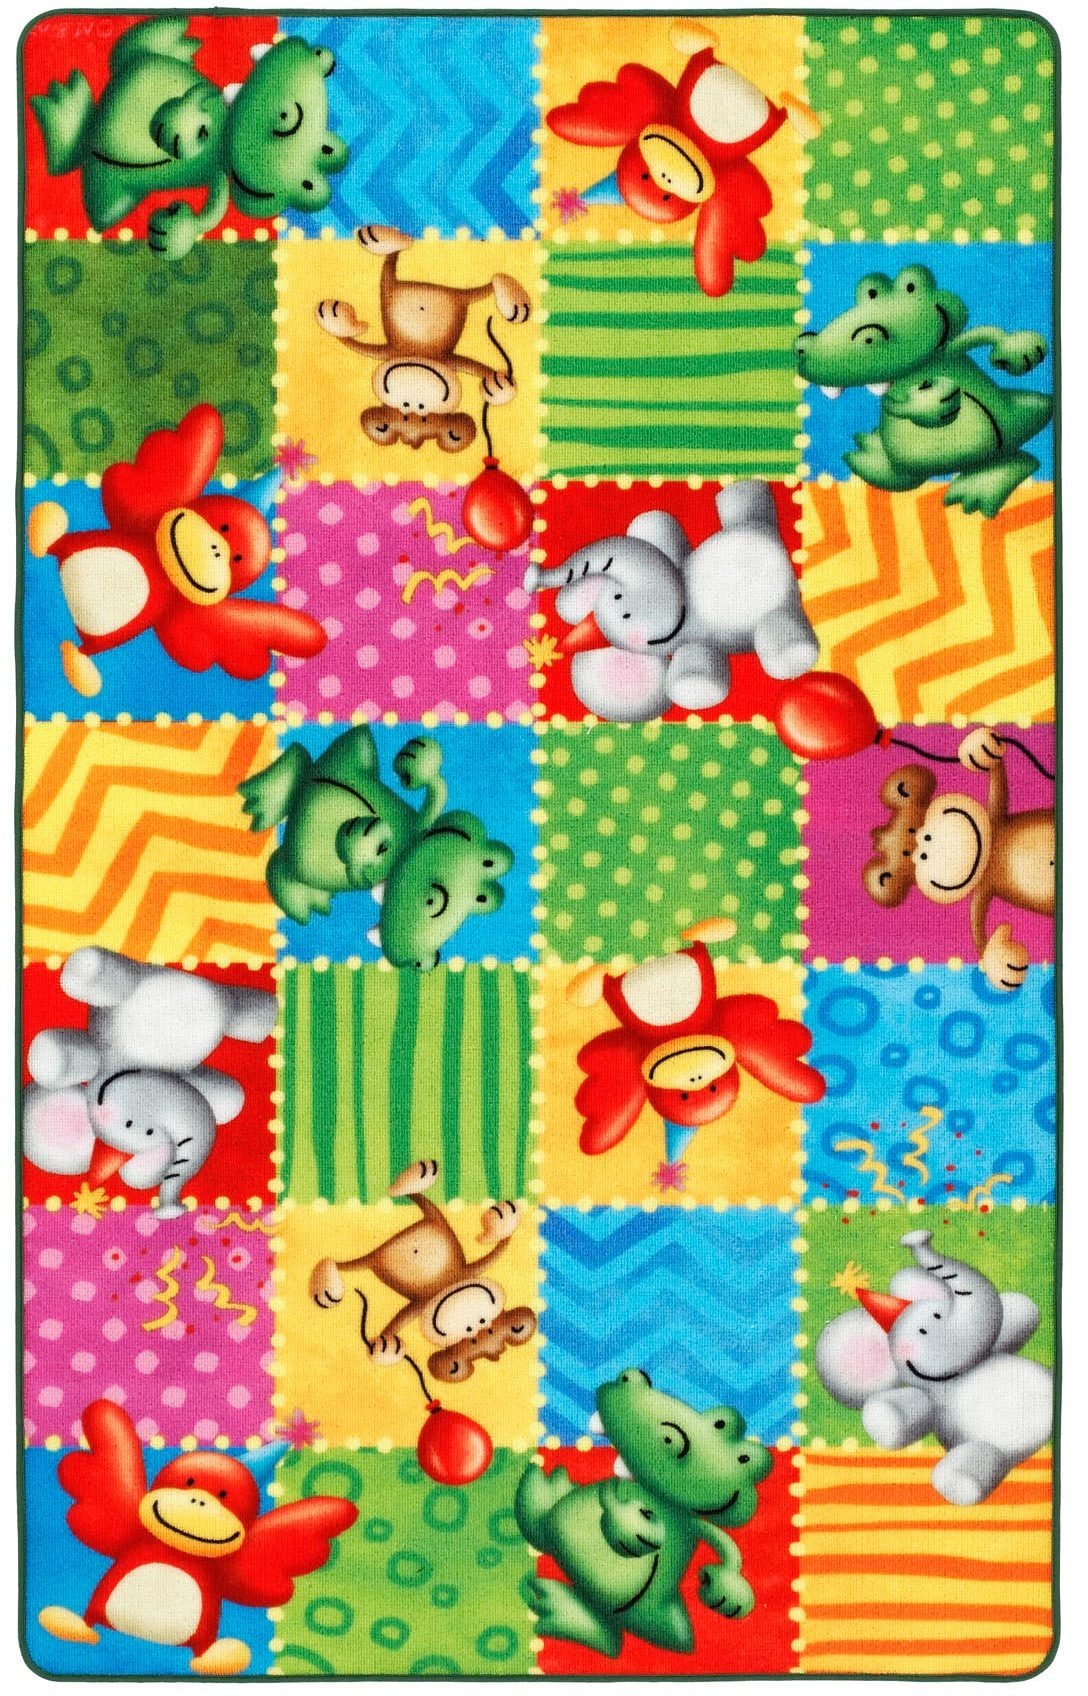 Böing Carpet Fußmatte »Lovely Kids LK-5«, rechteckig, Schmutzfangmatte, Druckteppich, Motiv Zootiere, Kinderzimmer